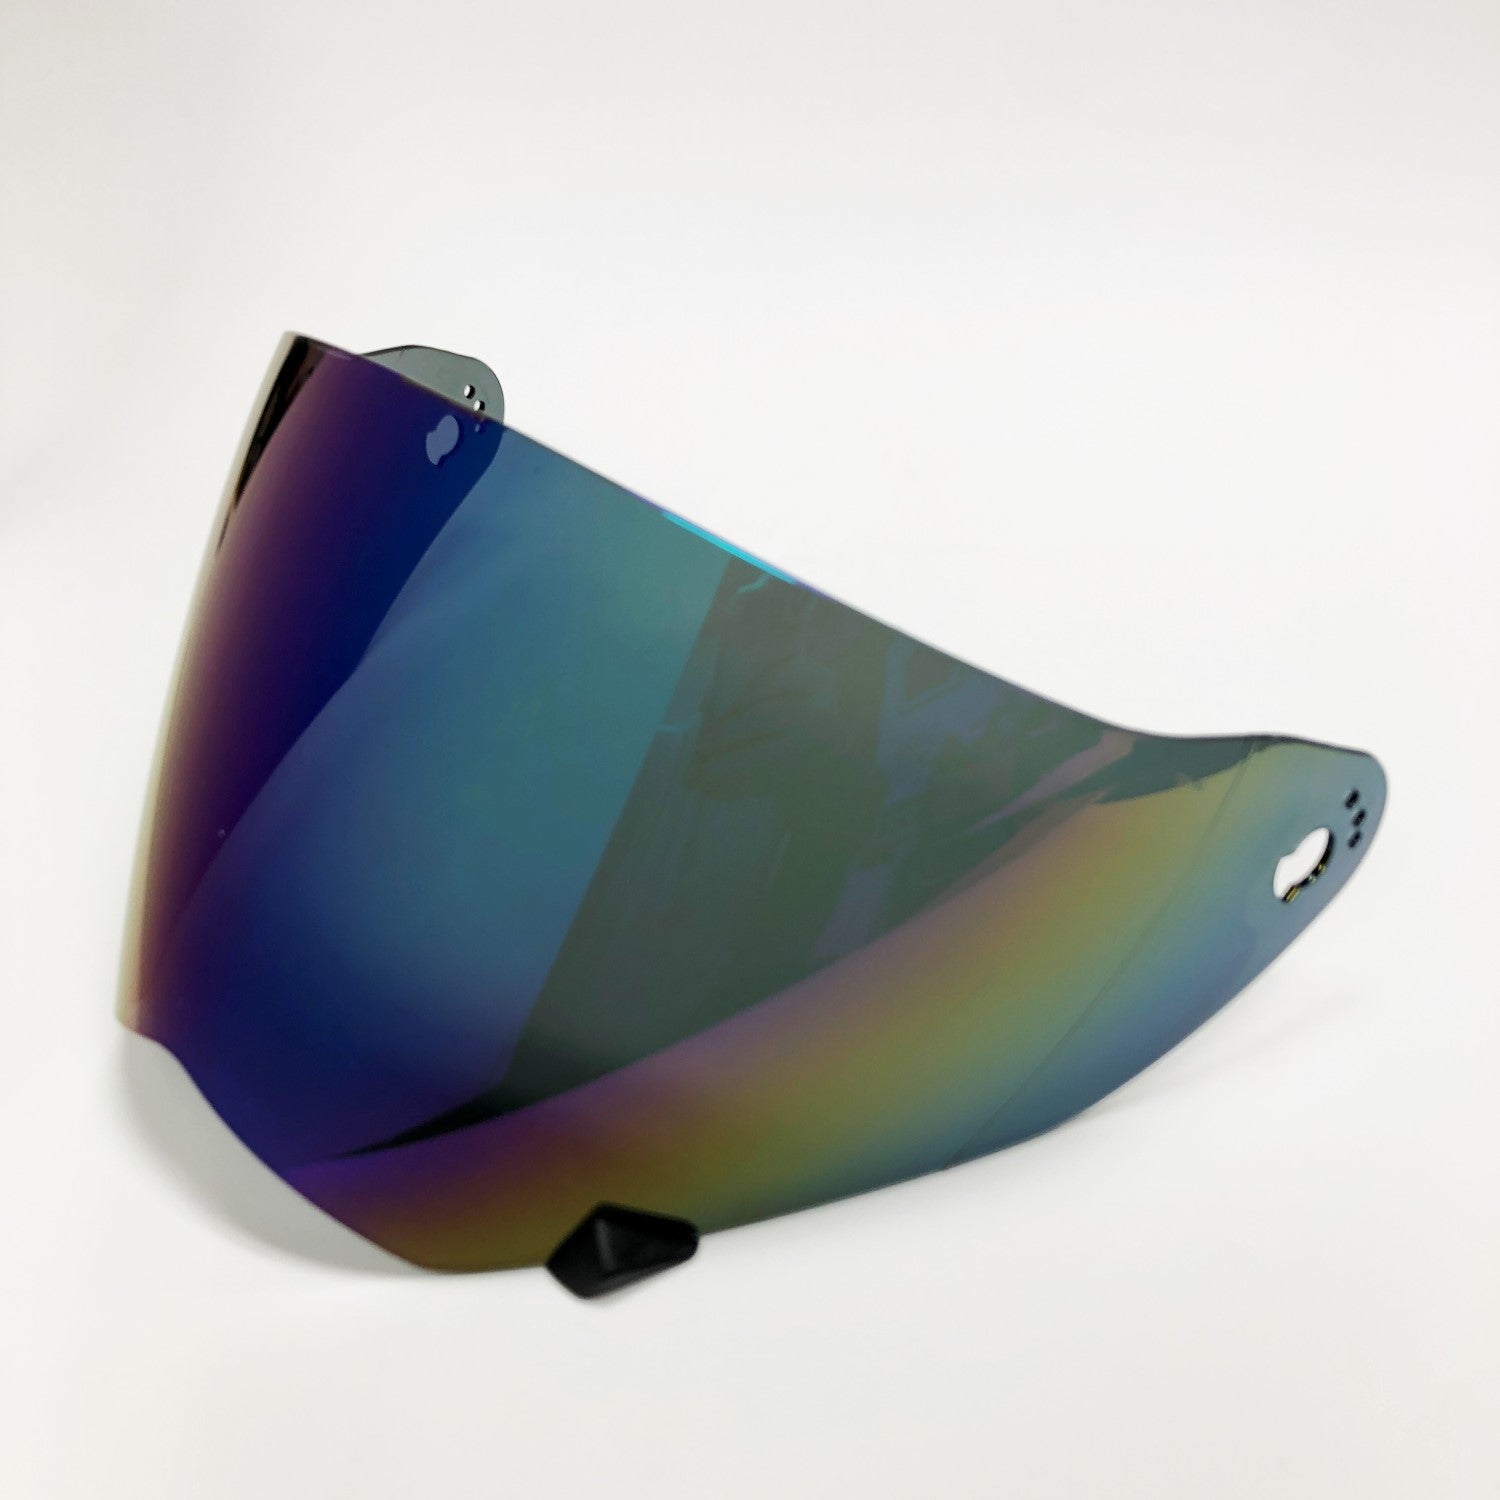 Suomy MX Tourer Visor Shield Windscreen (3 Colors)